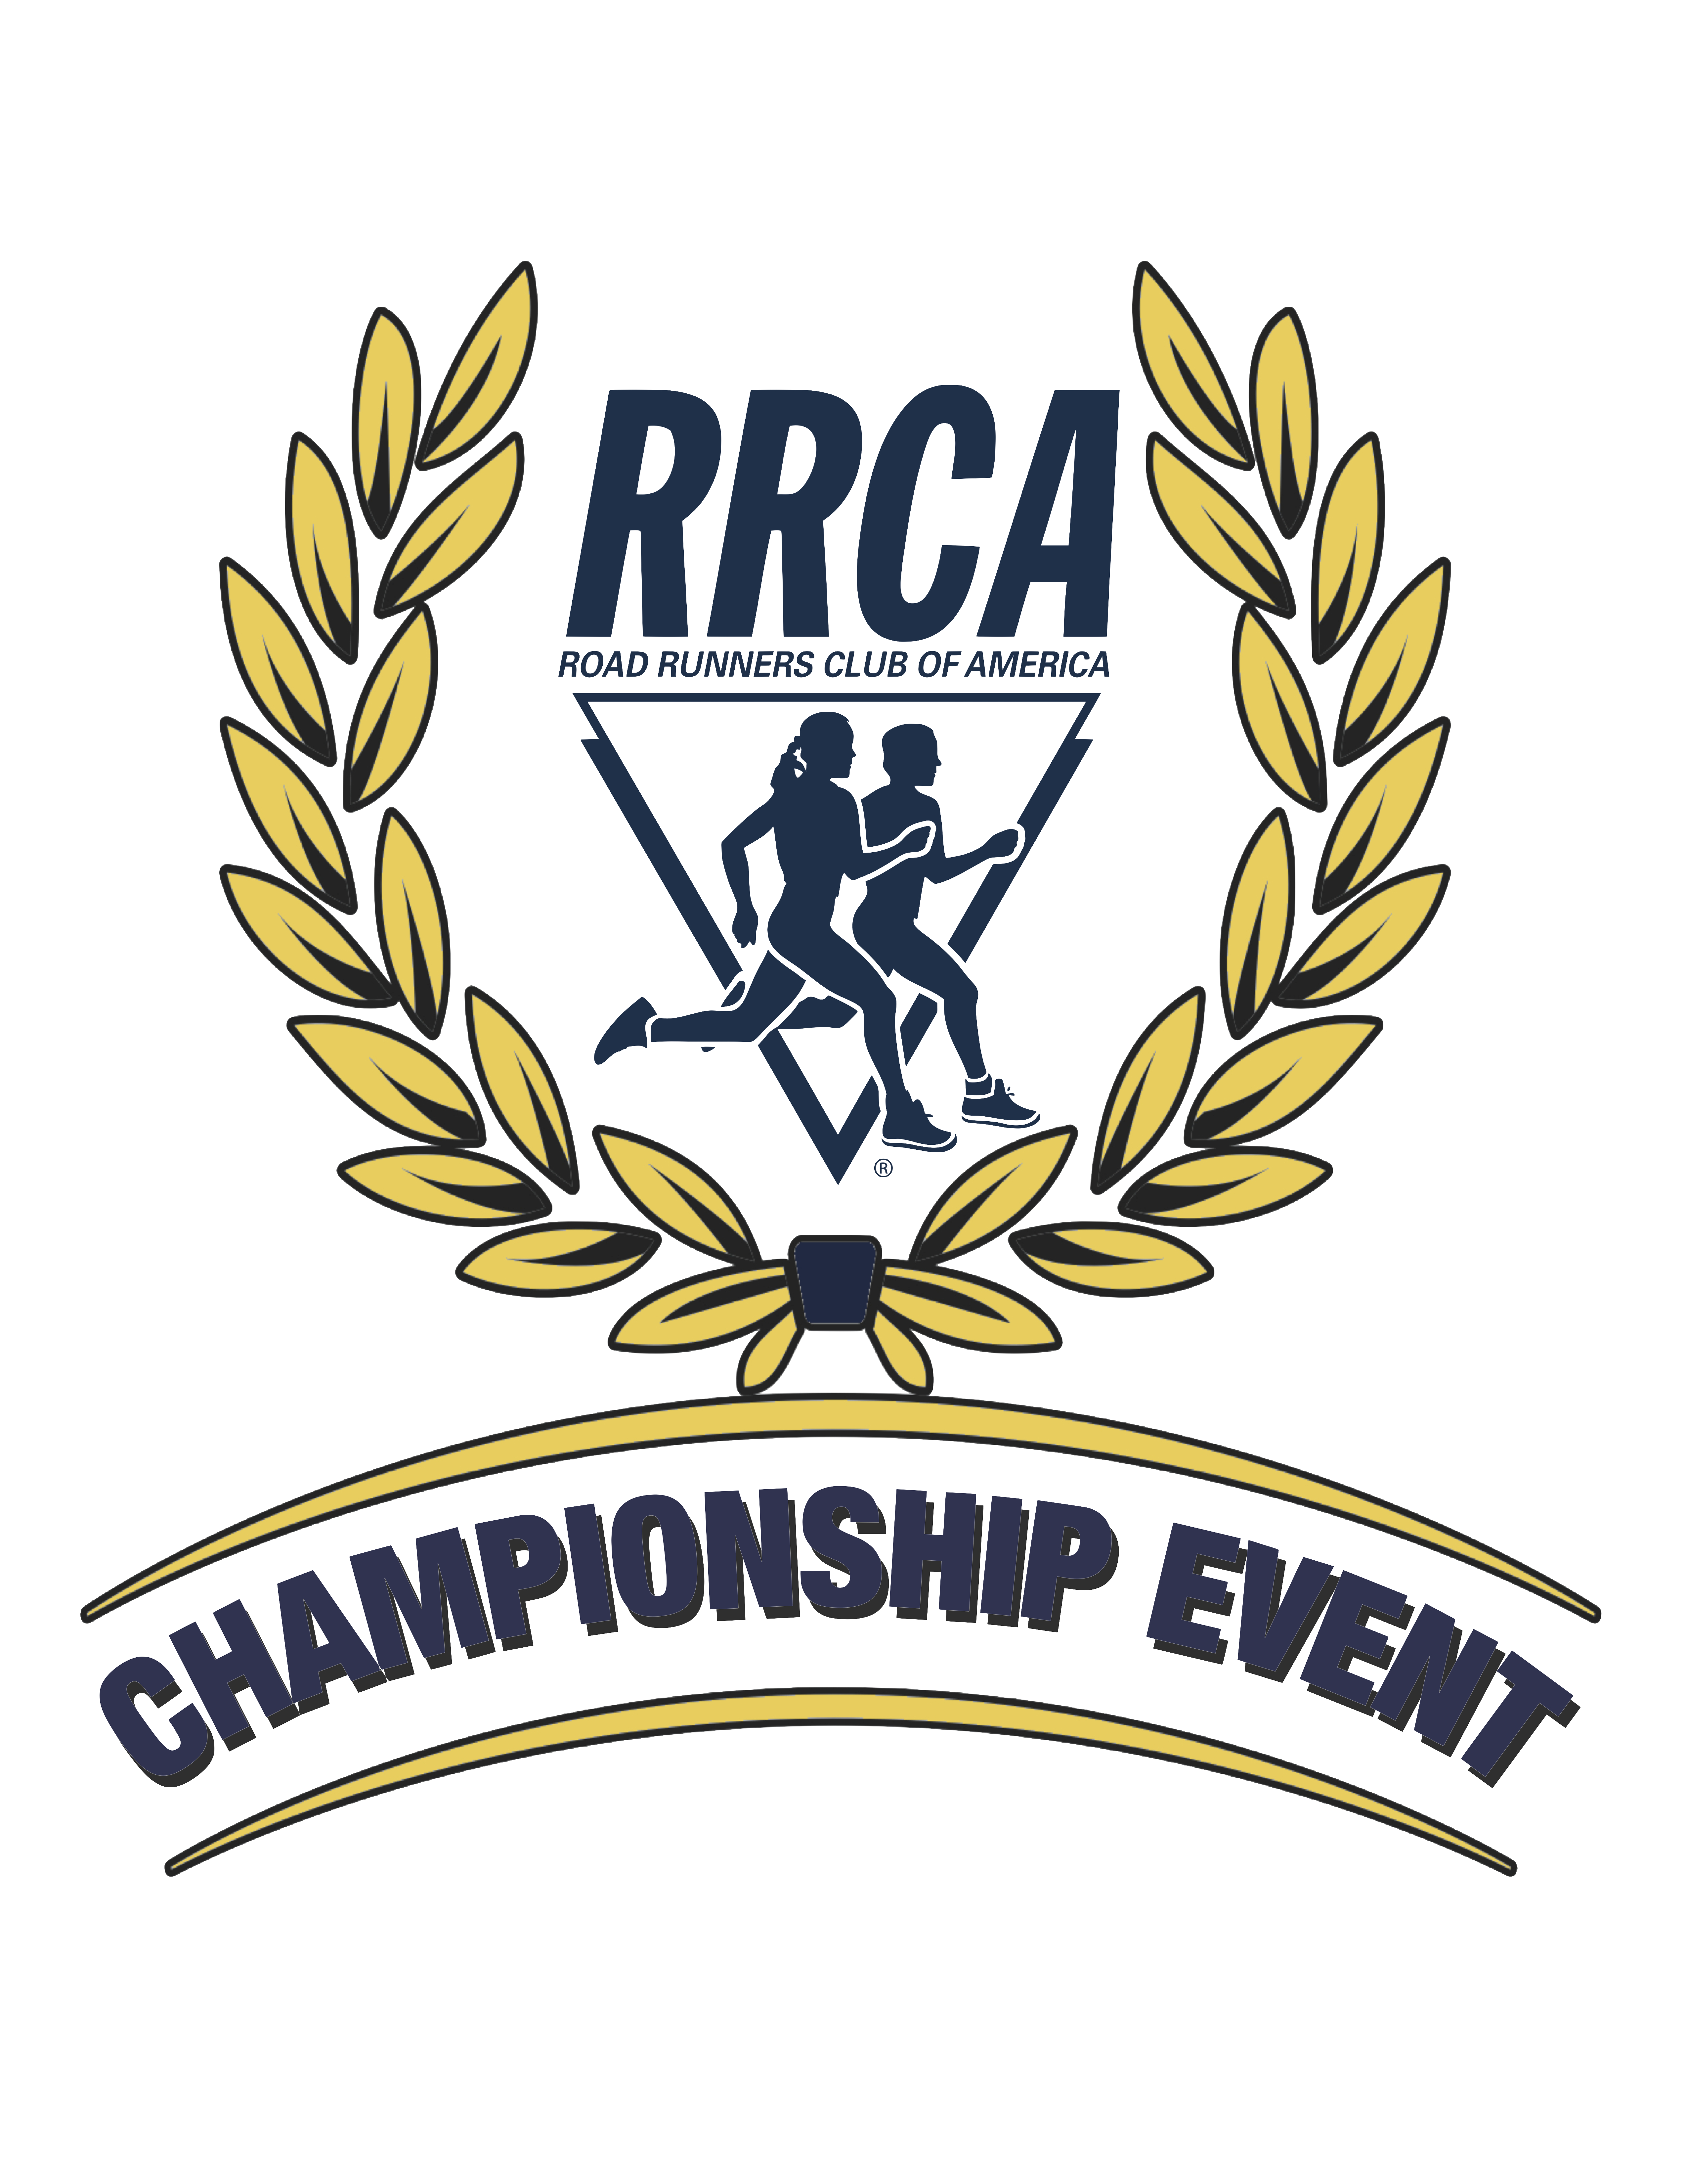 RRCA Championship Event